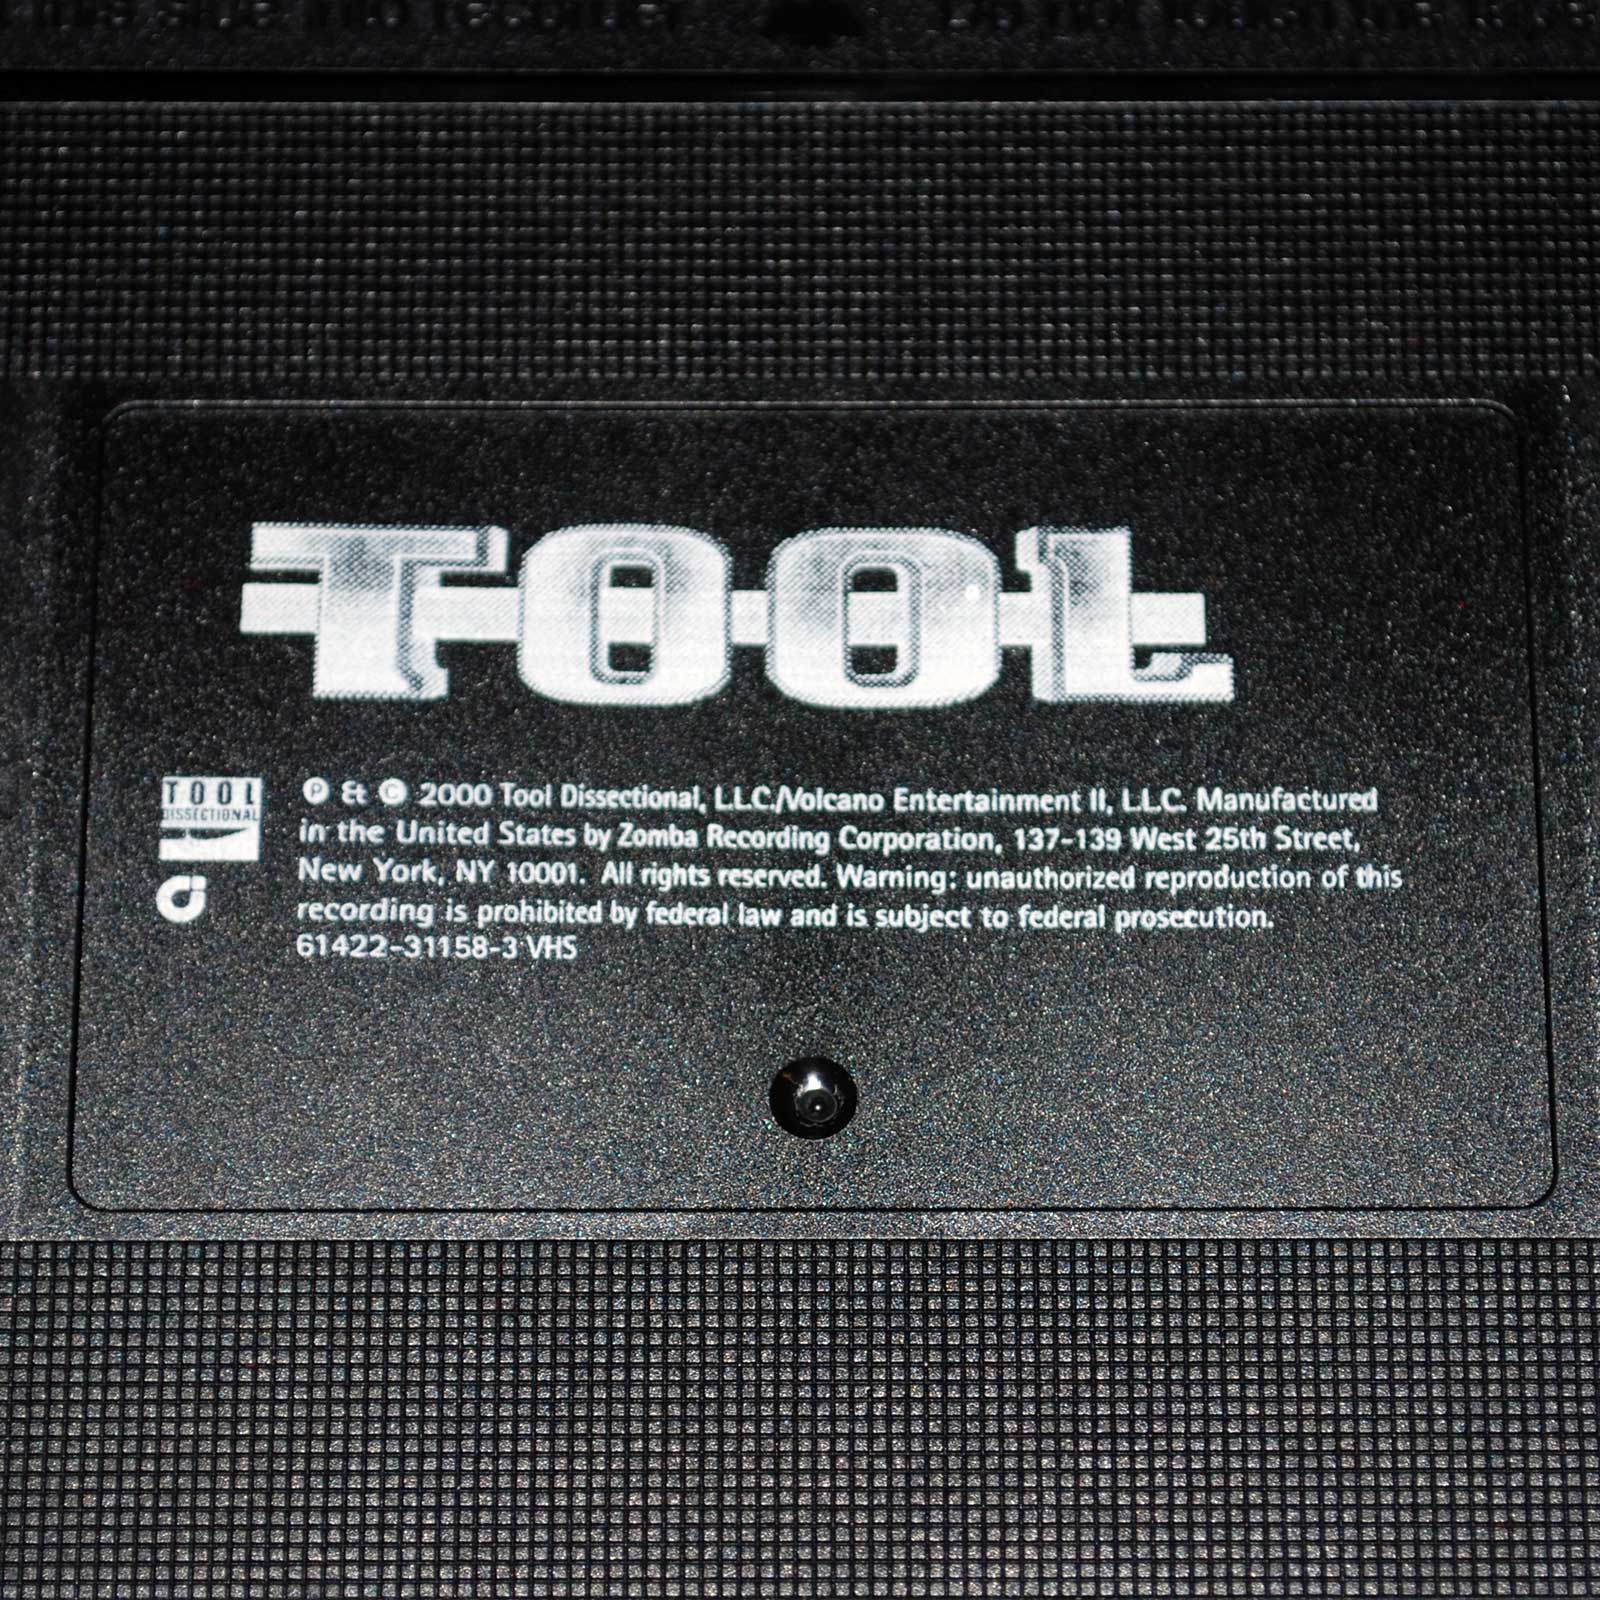 Tool Salival 2000 CD / VHS Boxset US Volcano 61422-31158-2 NTSC 17